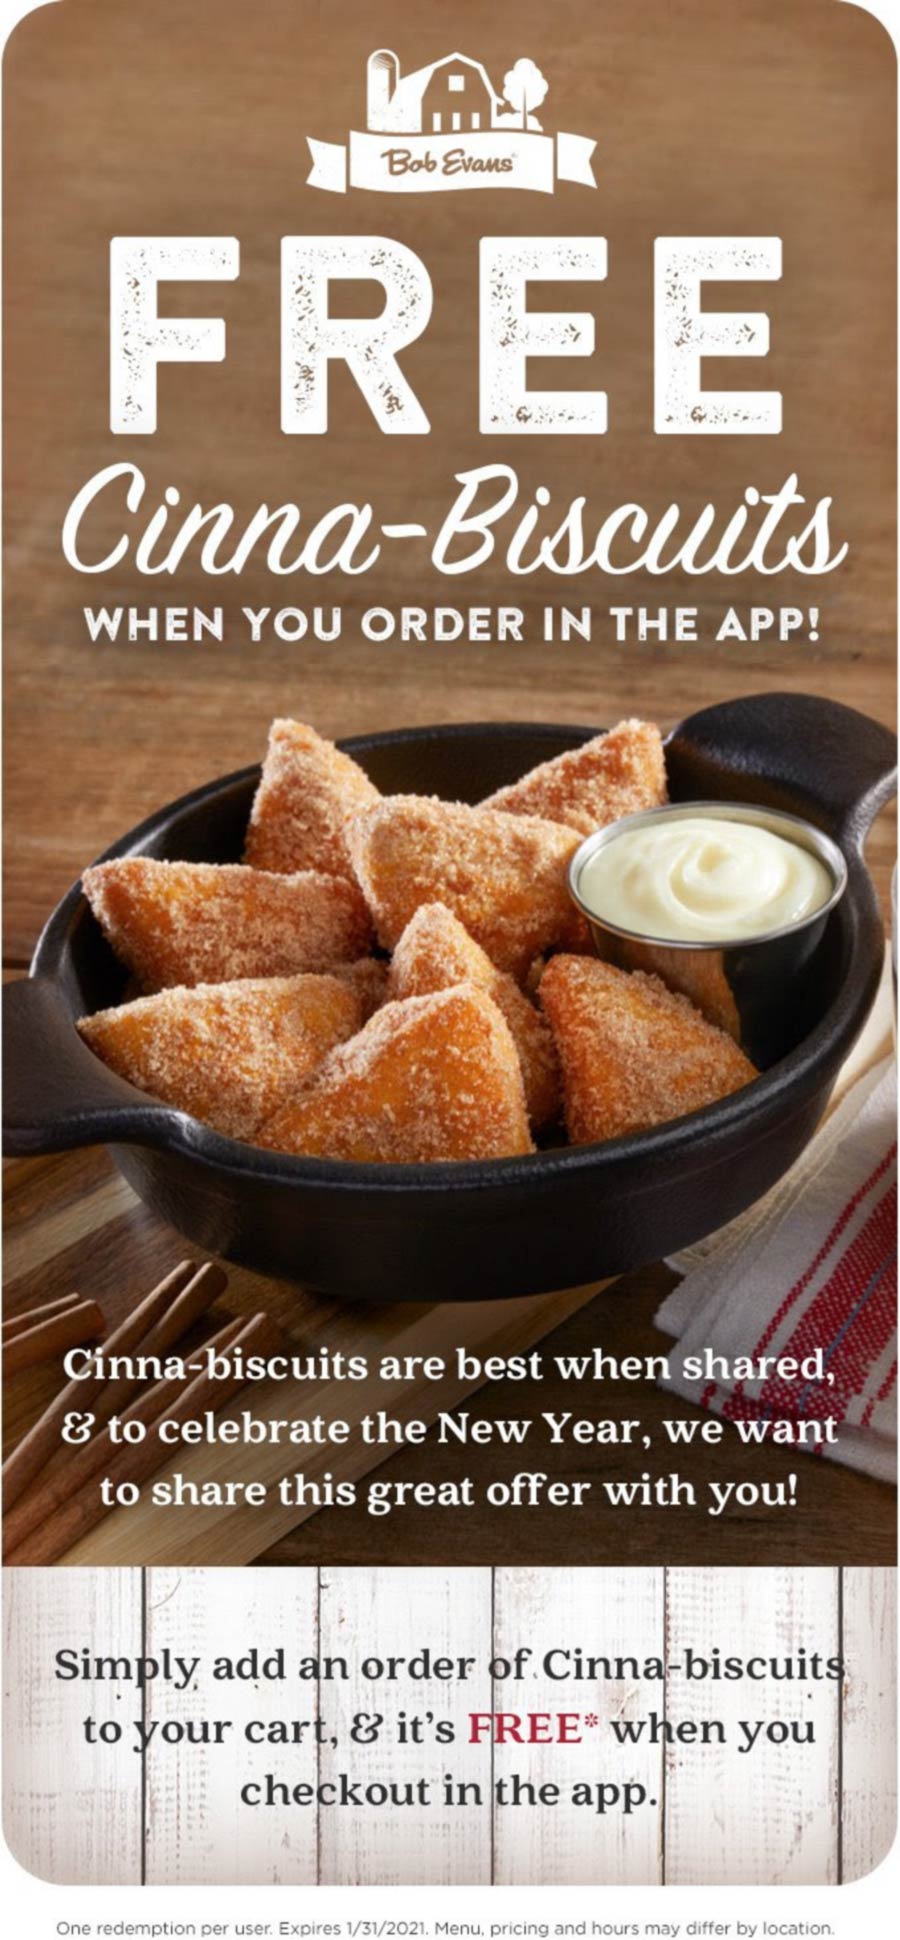 Bob Evans restaurants Coupon  Free cinna-biscuits with app orders at Bob Evans restaurants #bobevans 